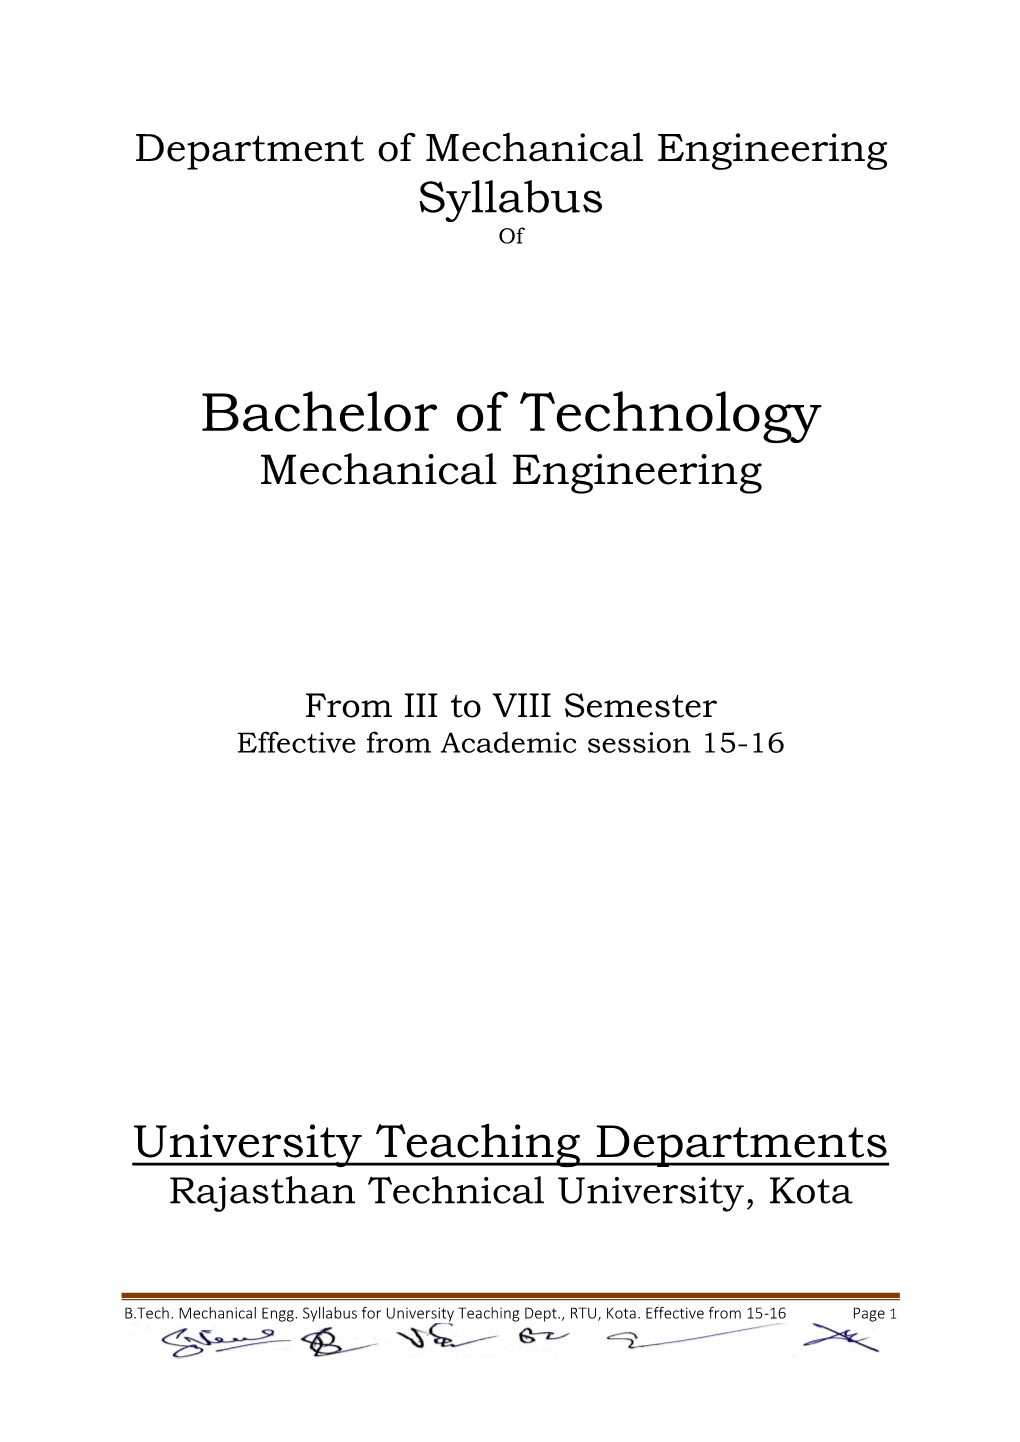 Bachelor of Technology Mechanical Engineering